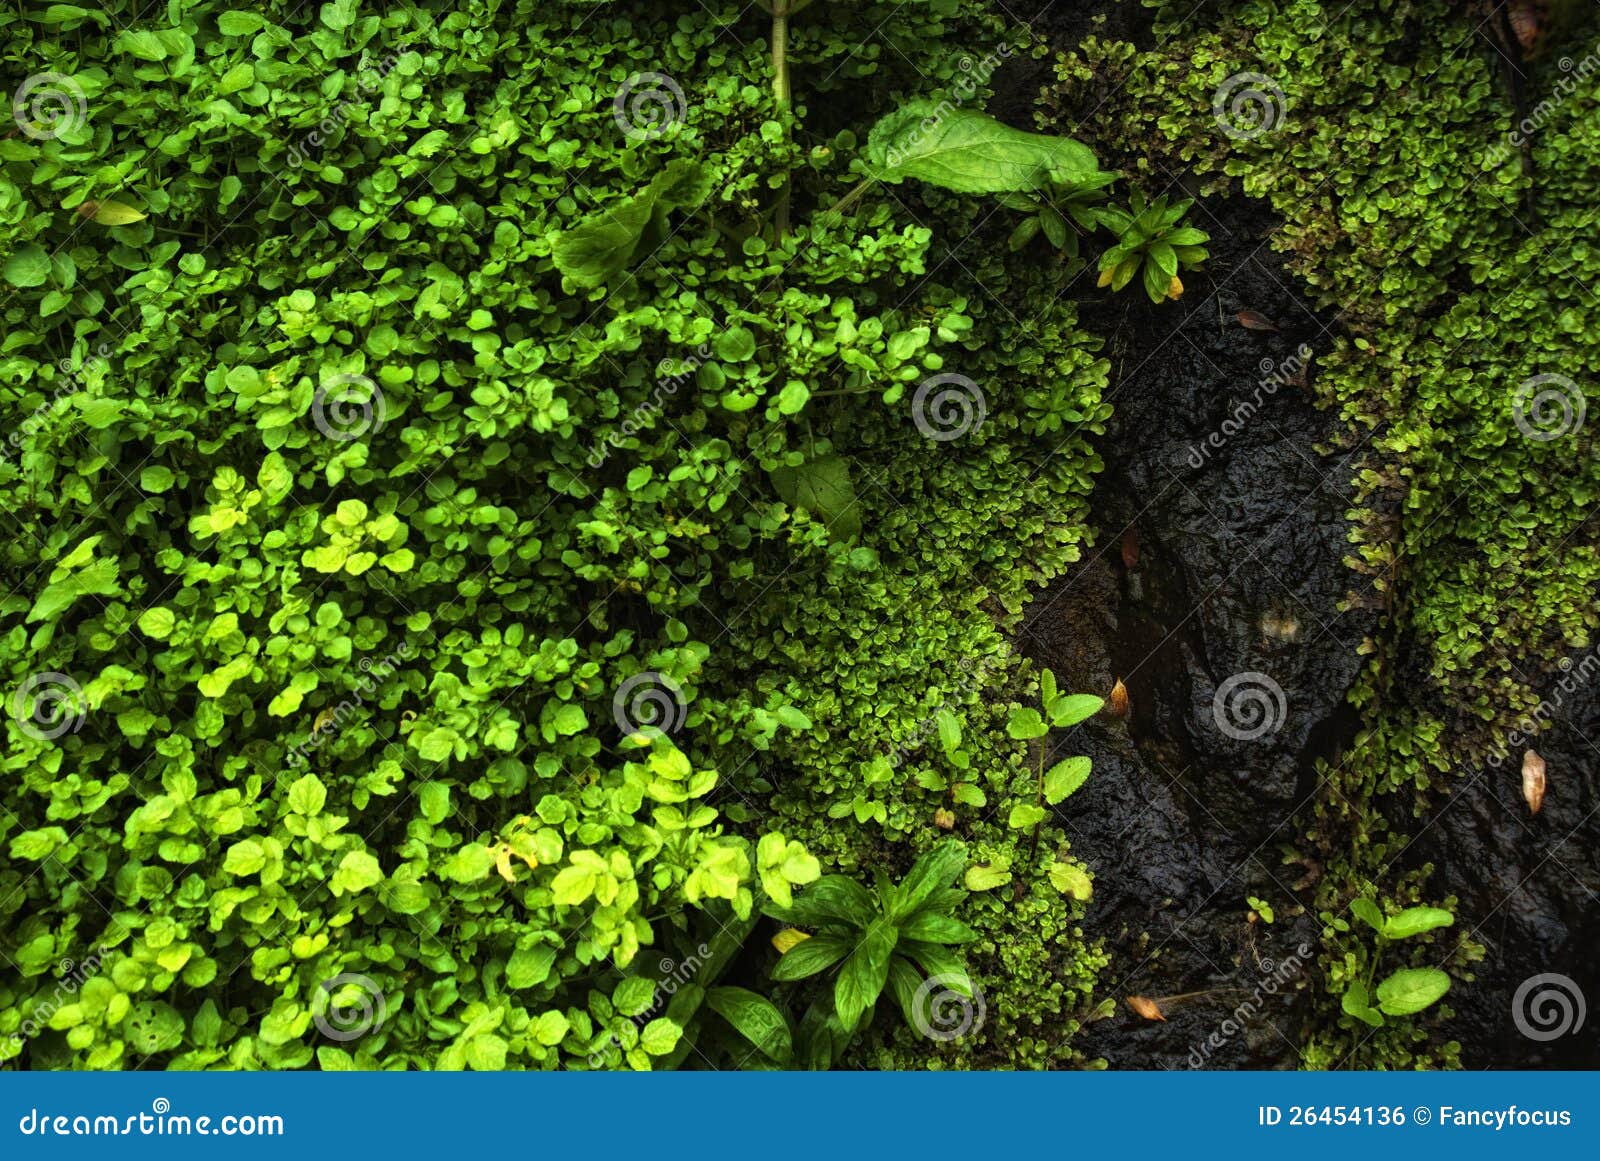 watercress - plants of acores archipelago